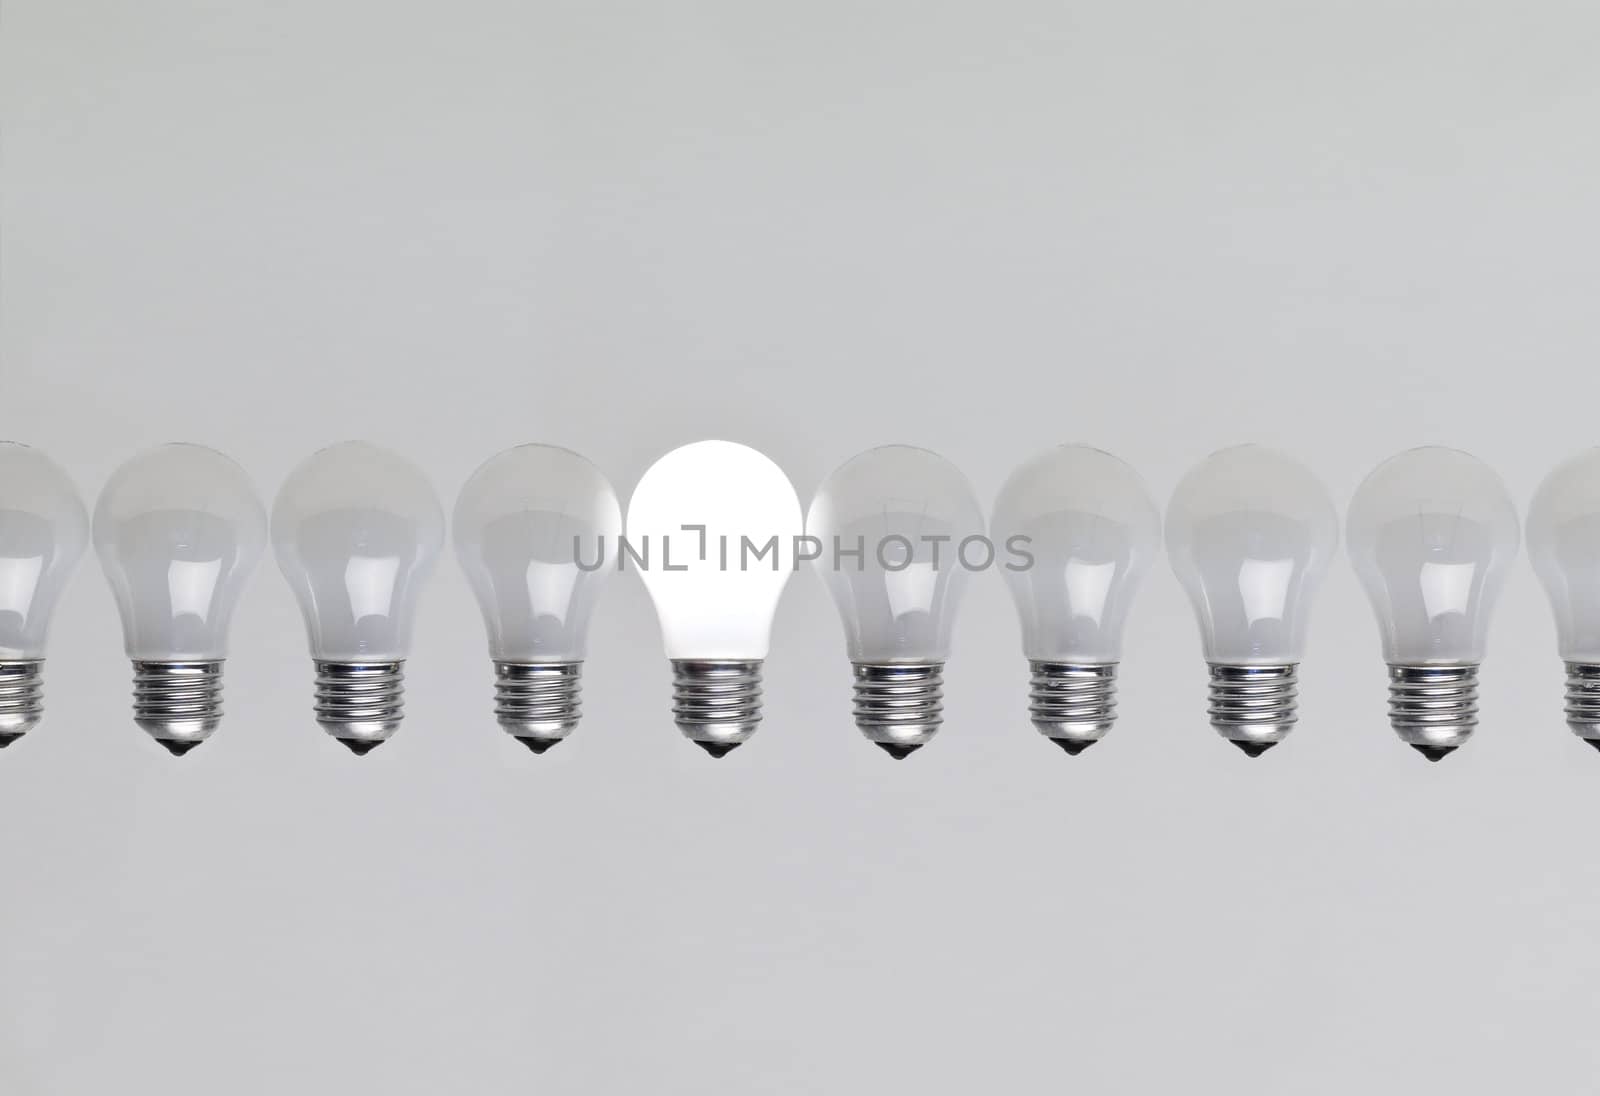 Row of light bulbs by gemenacom